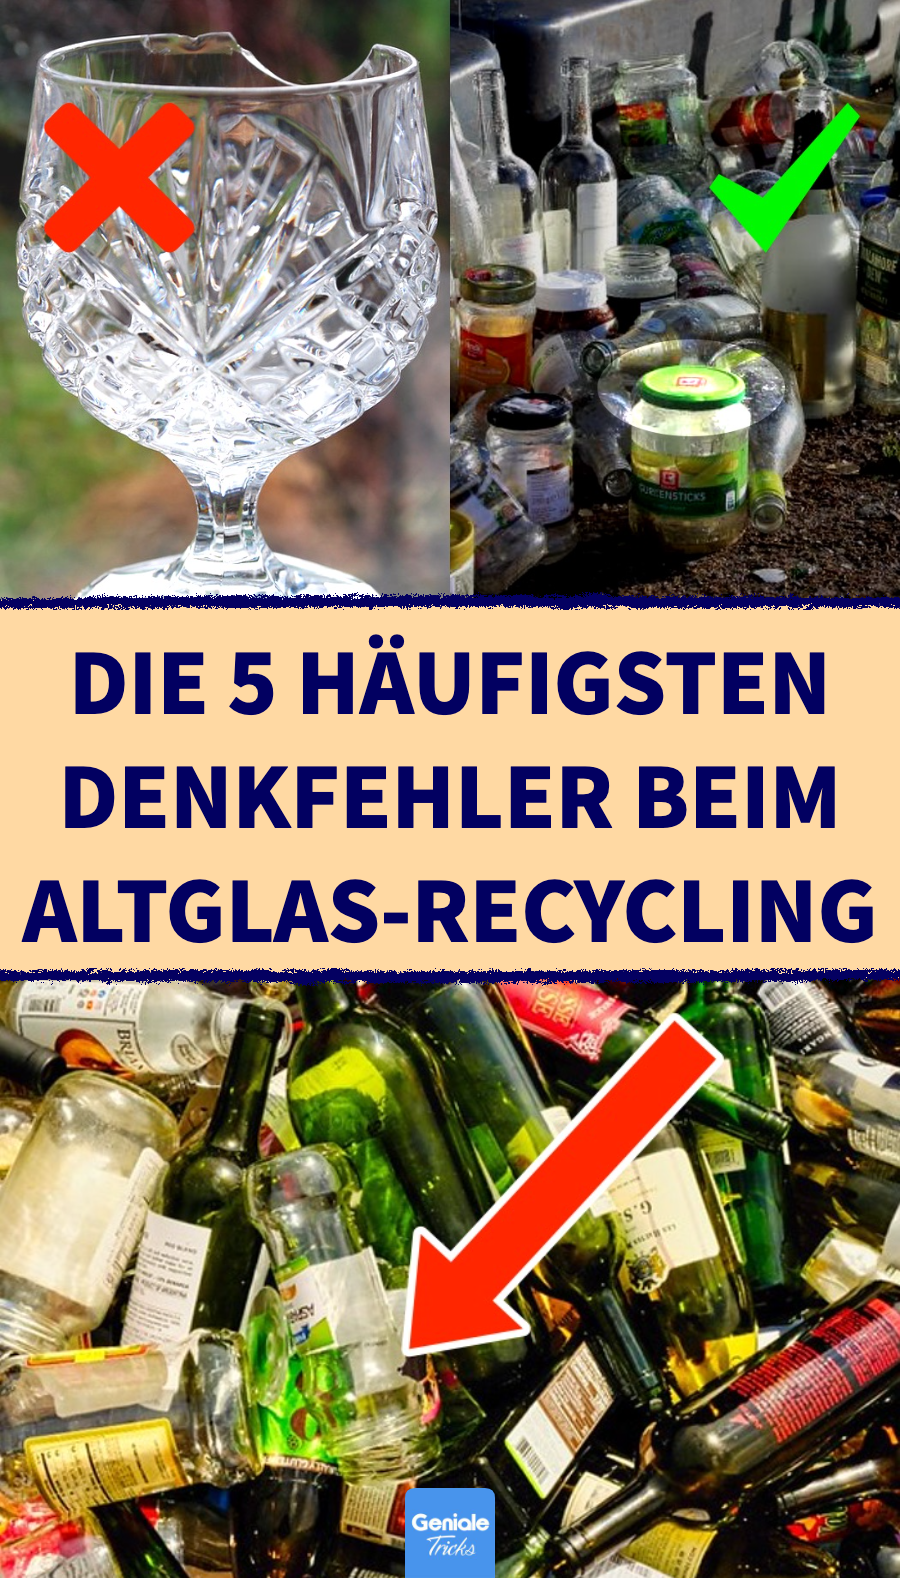 Altglas-Recycling: Was darf nicht in den Container?